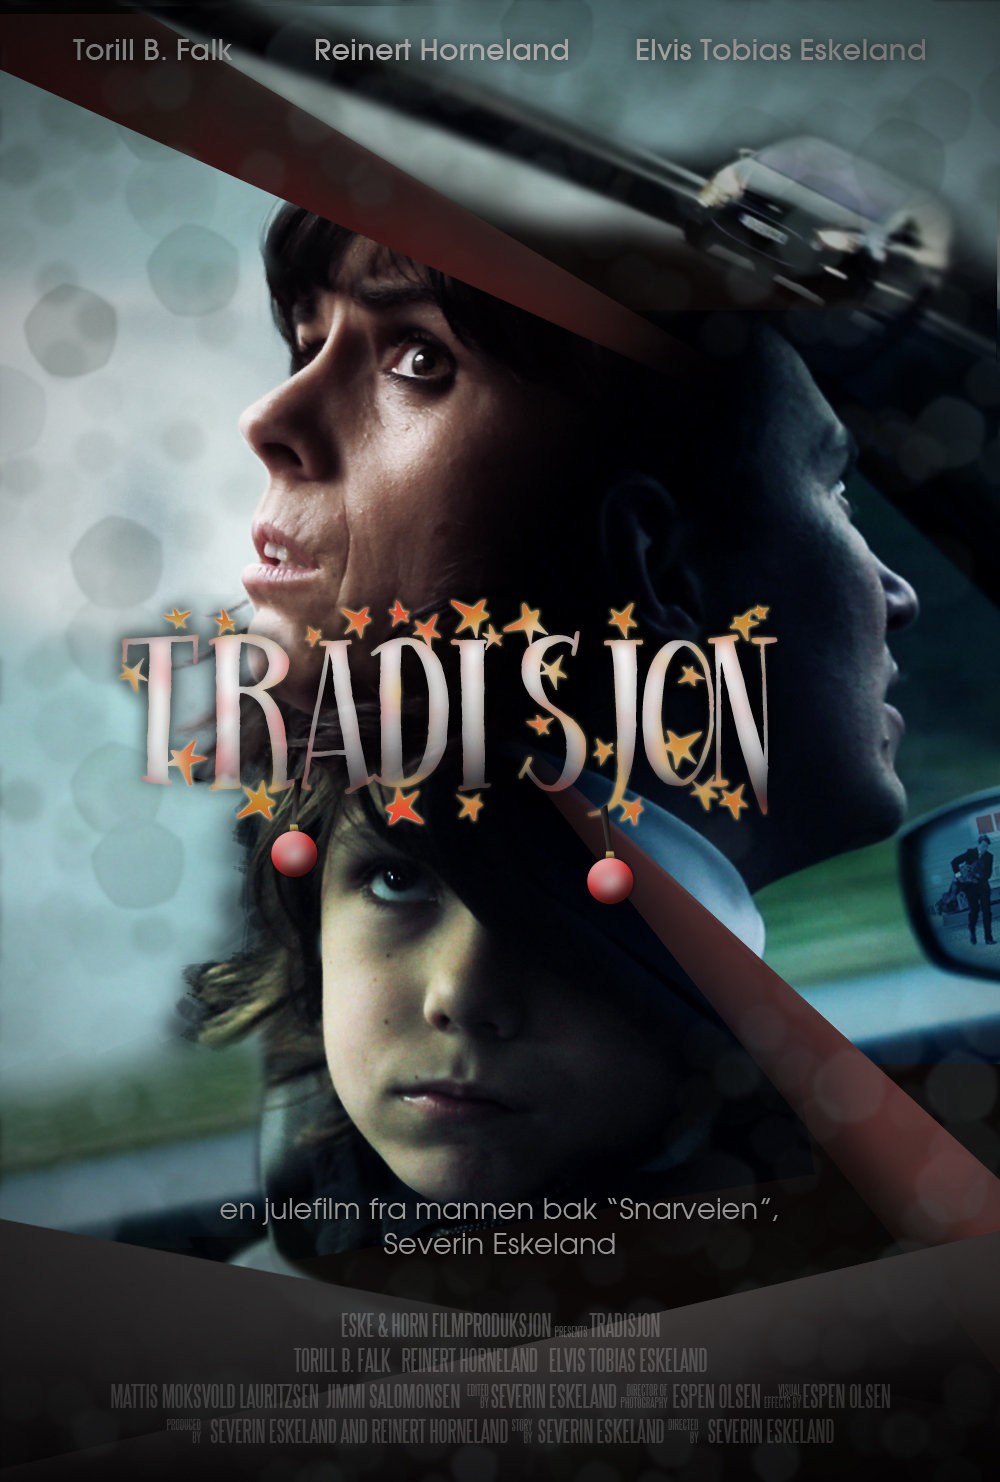 Extra Large Movie Poster Image for Tradisjon